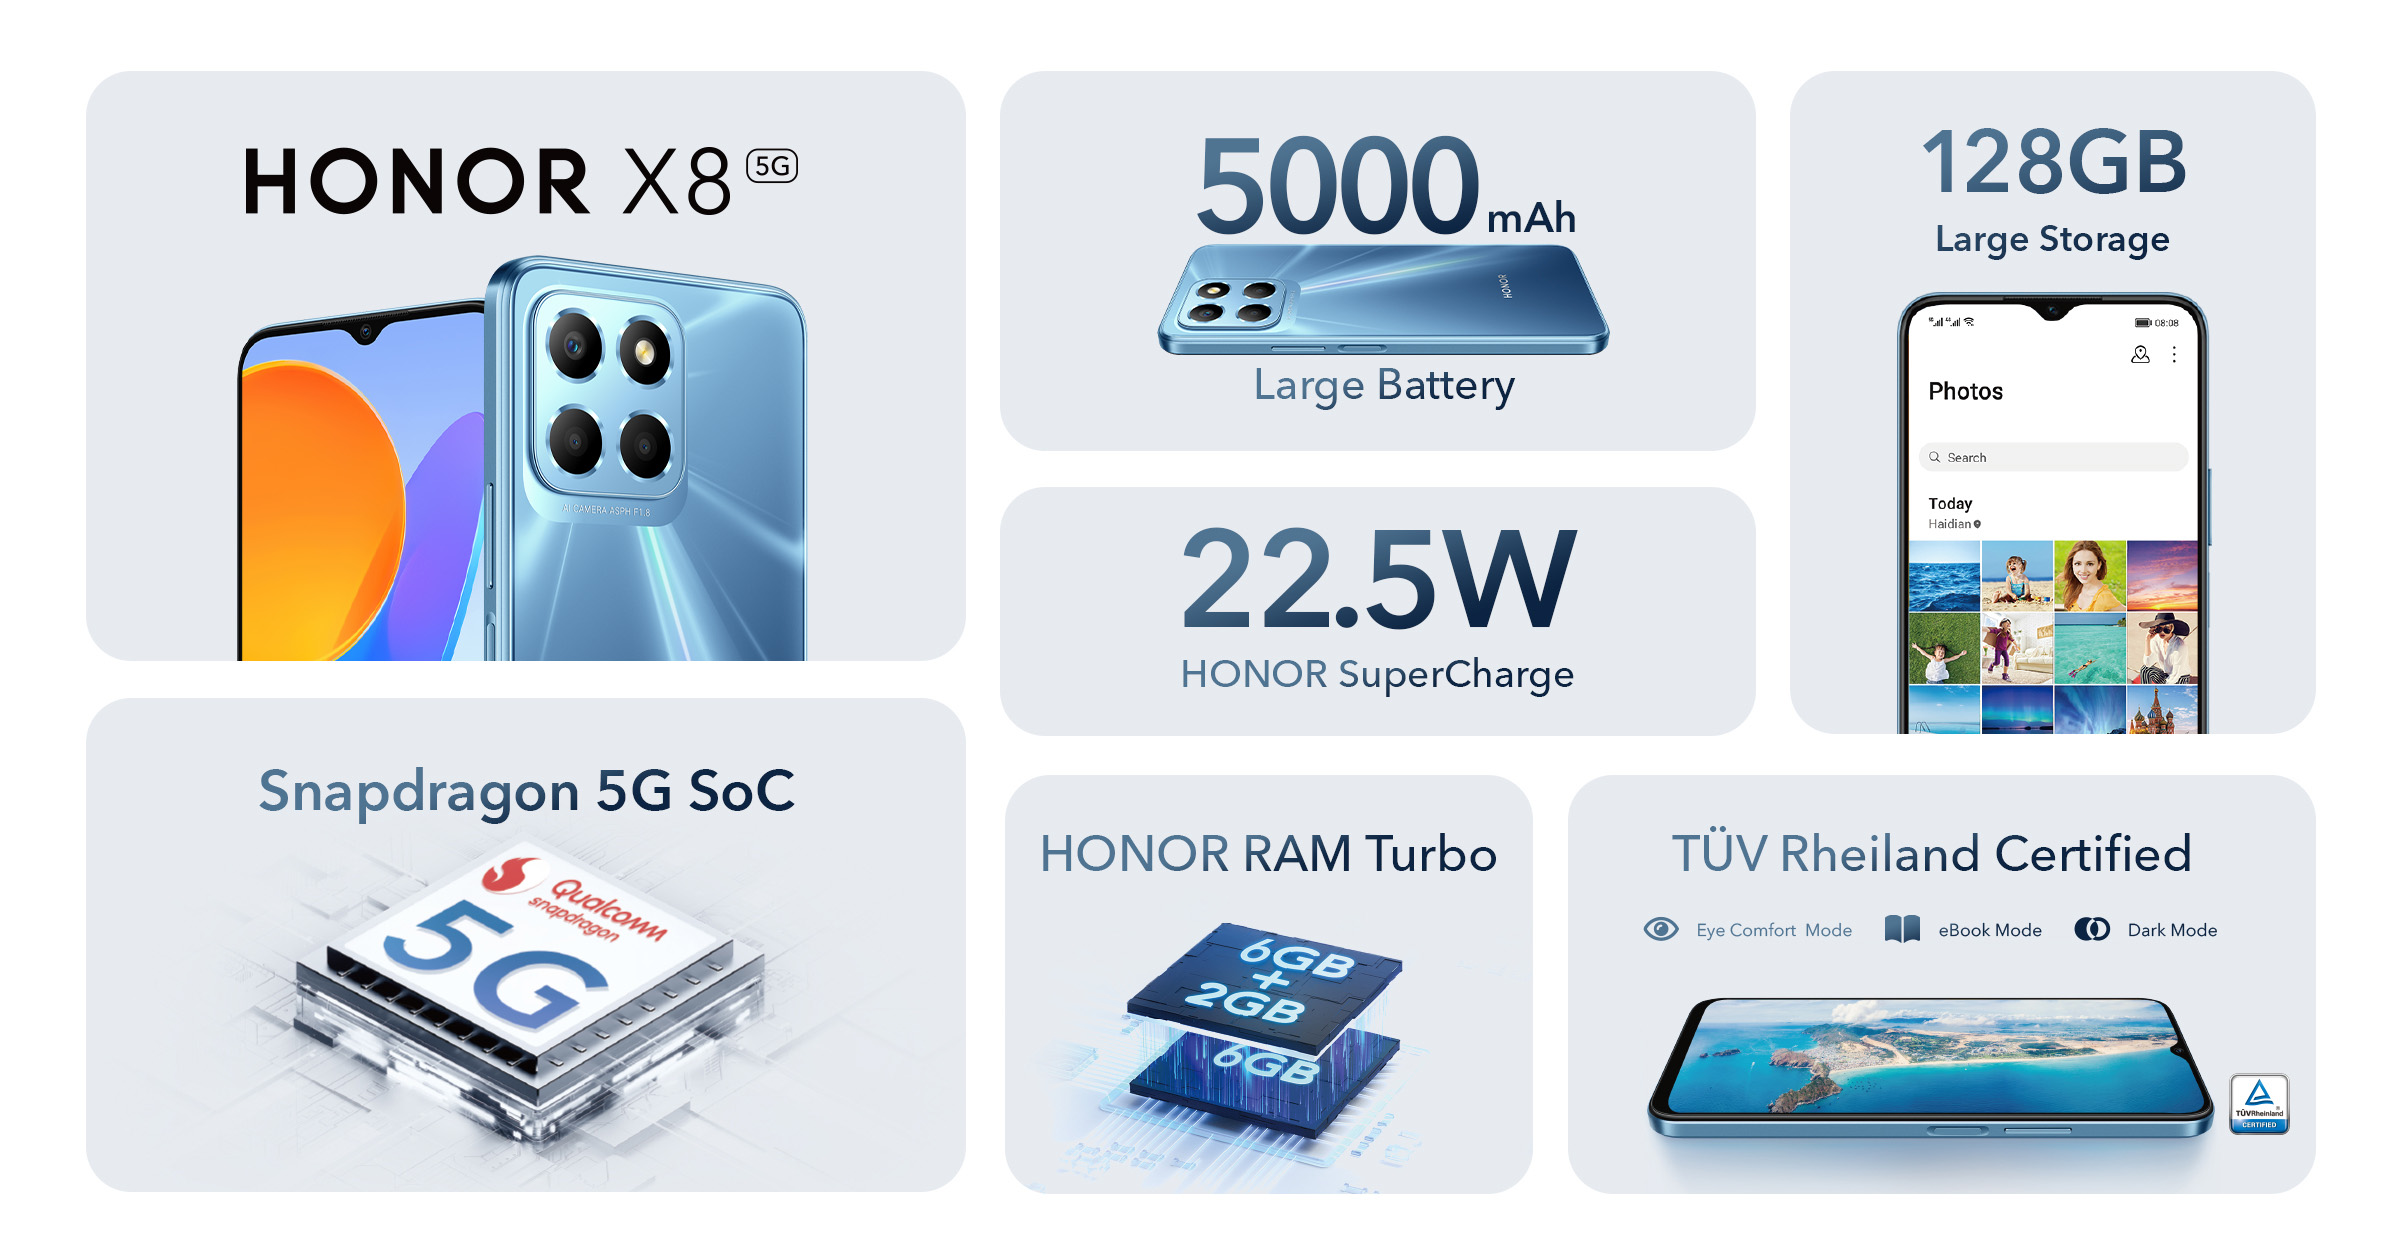 HONOR X8 5G coming with Snapdragon® 5G SoC and 5000mAh Long-lasting Battery Life.